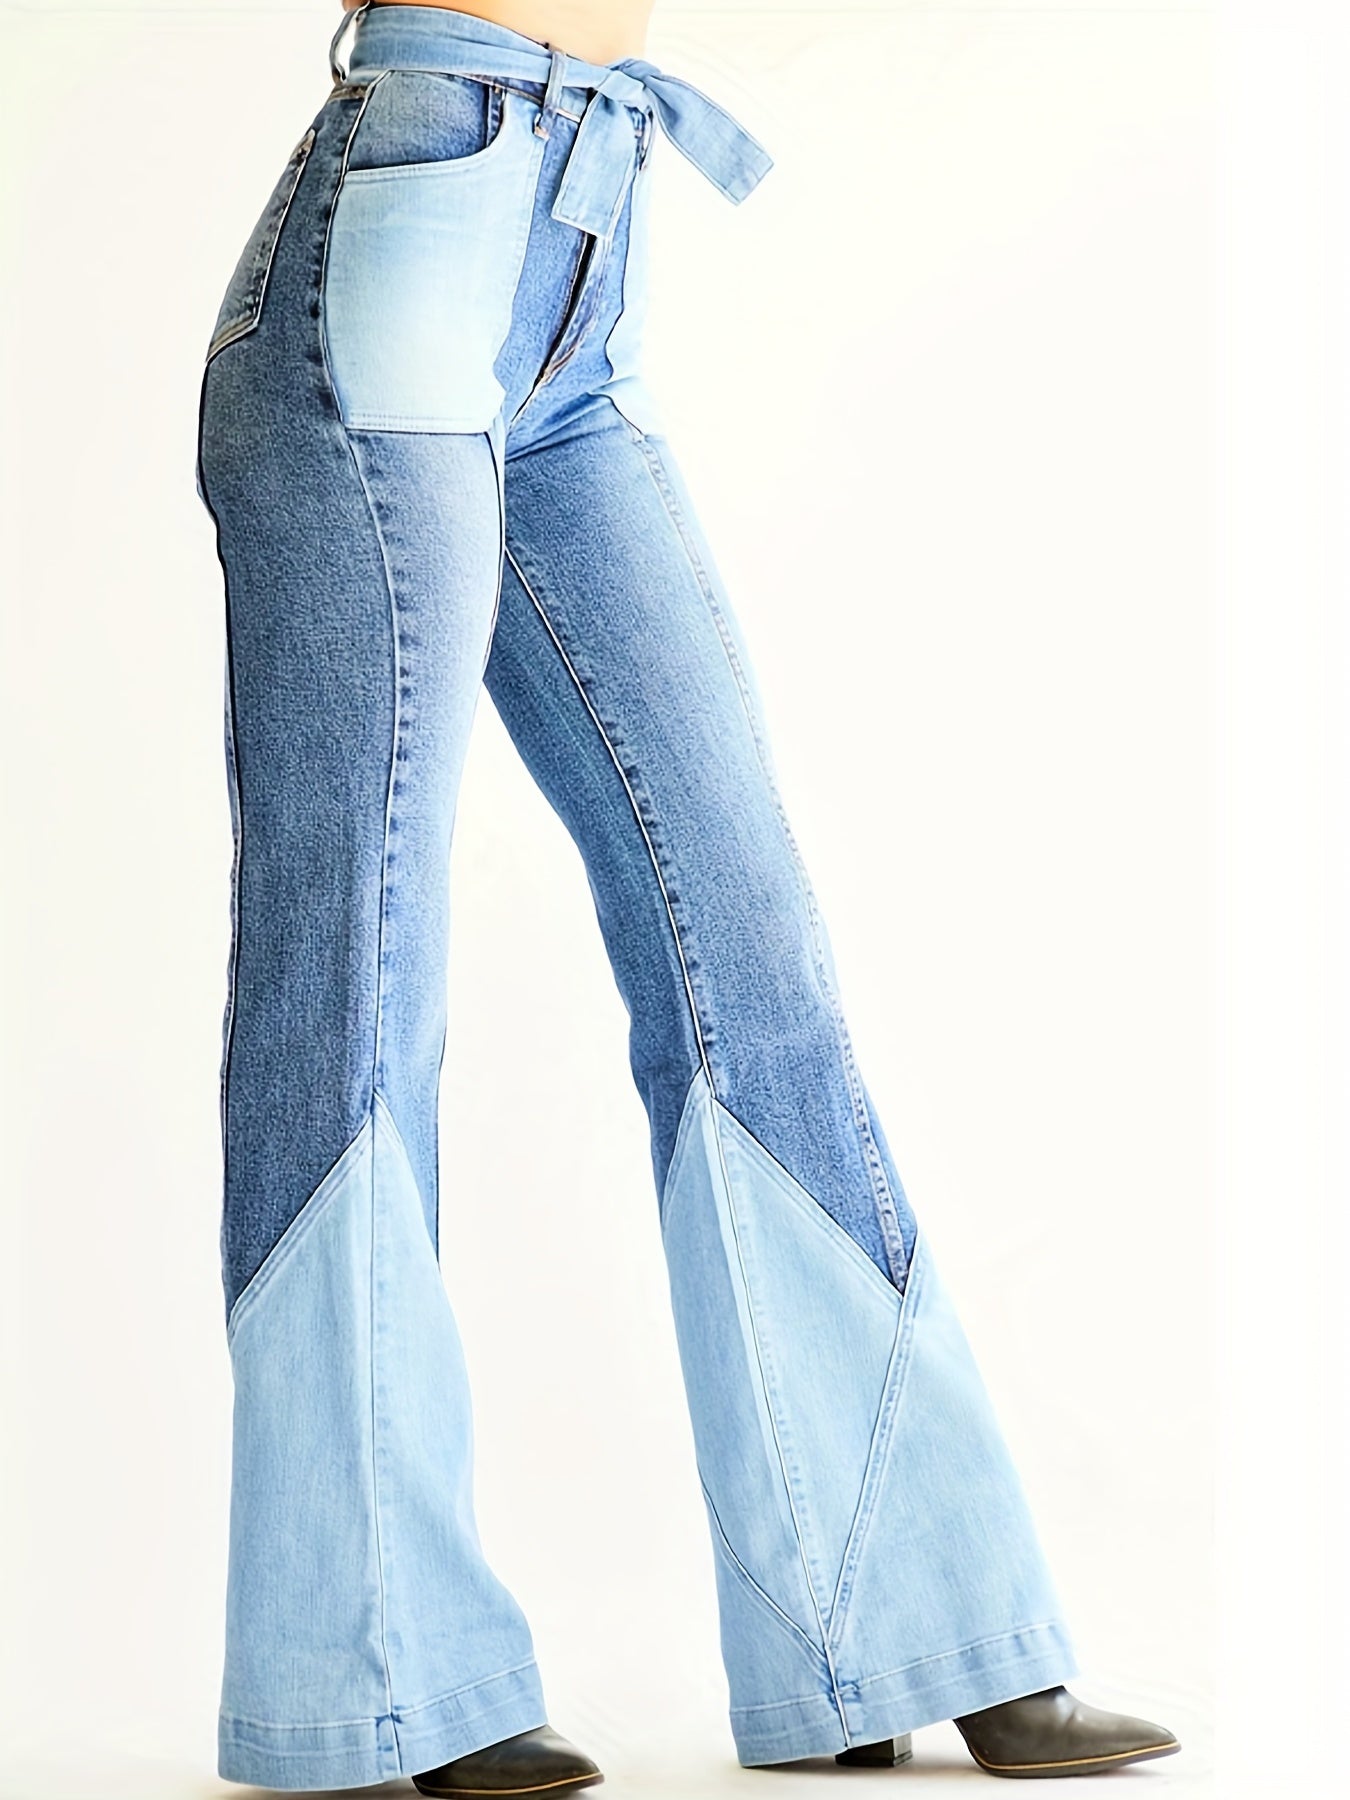 「lovevop」Colorblock High Waist Flare Jeans, Slash Pockets High Rise Bell Bottom With Belt Stretchy Denim Pants, Boho Y2k Kpop Vintage Style, Women's Denim Jeans & Clothing